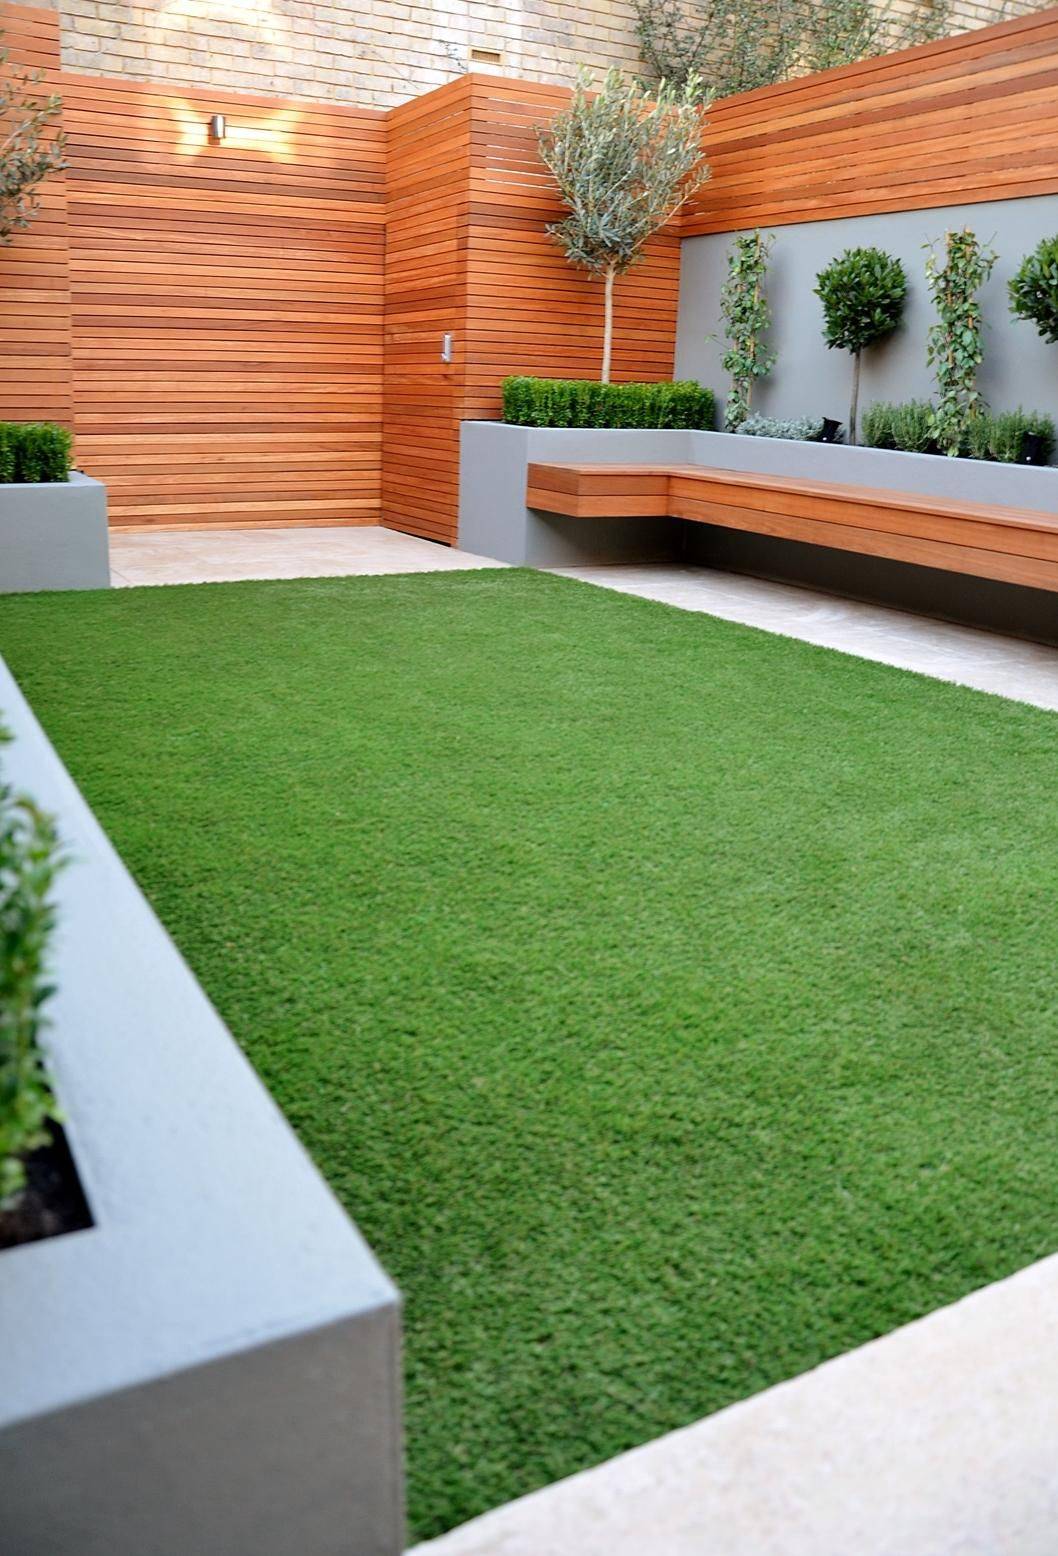 The Top Garden Wall Ideas Landscaping Design